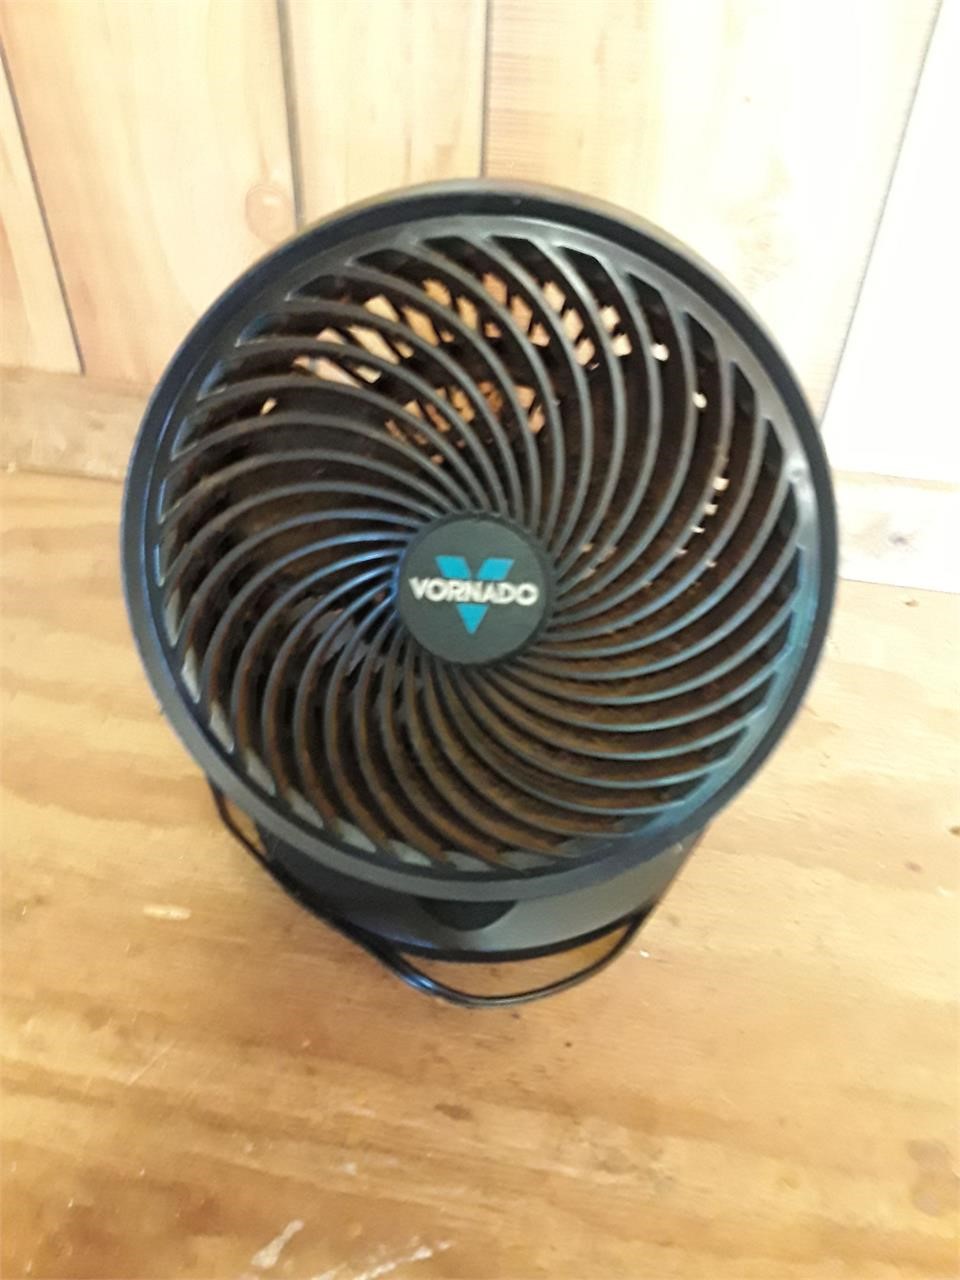 Vornado Tabletop Fan